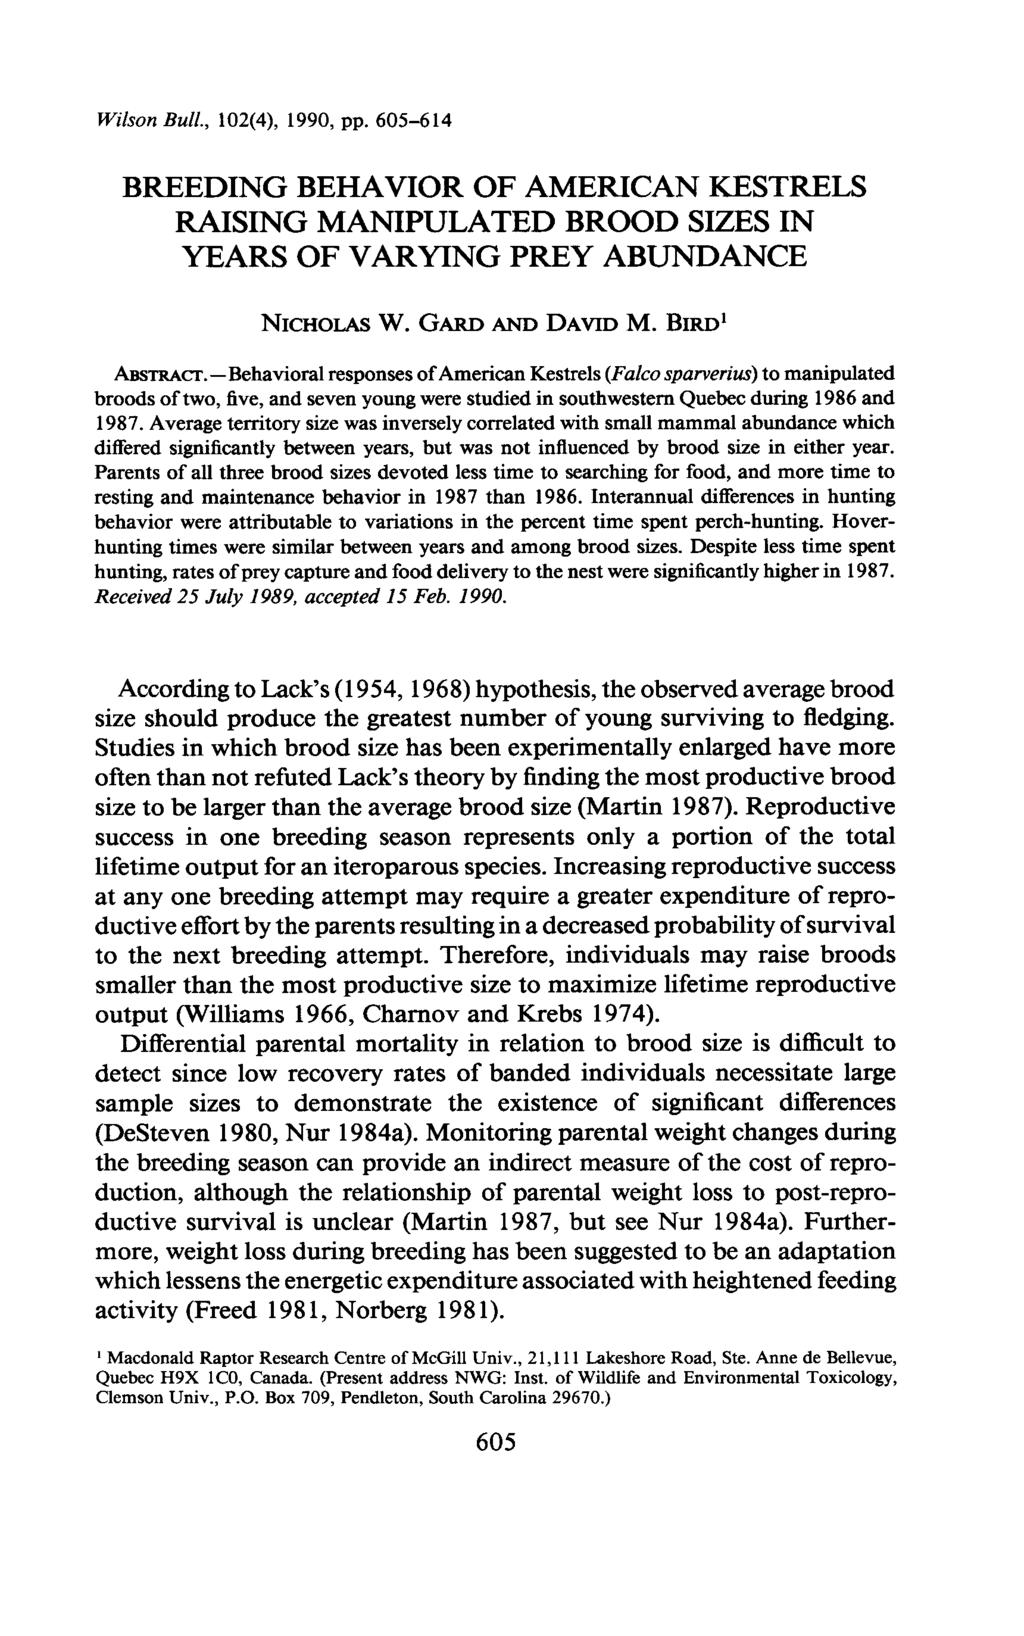 Wilson Bull., 102(4), 1990, pp. 605-614 BREEDING BEHAVIOR OF AMERICAN KESTRELS RAISING MANIPULATED BROOD SIZES IN YEARS OF VARYING PREY ABUNDANCE NICHOLAS W. GARD AND DAVID M. BIRD Aasmcr.